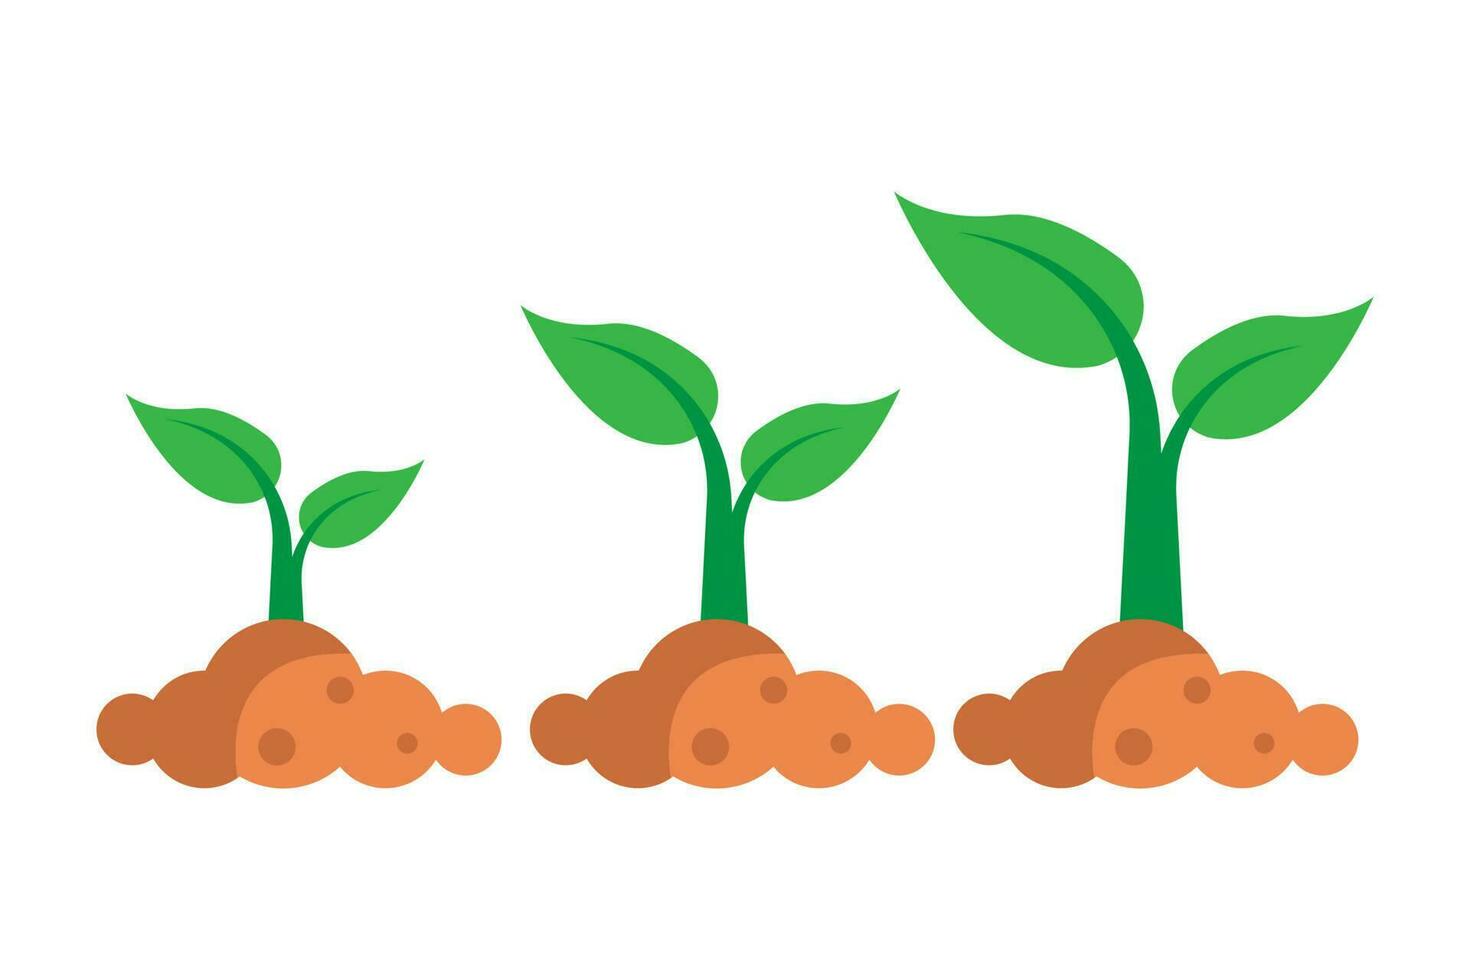 Plant seedlings green icons on white background. Vector illustration.